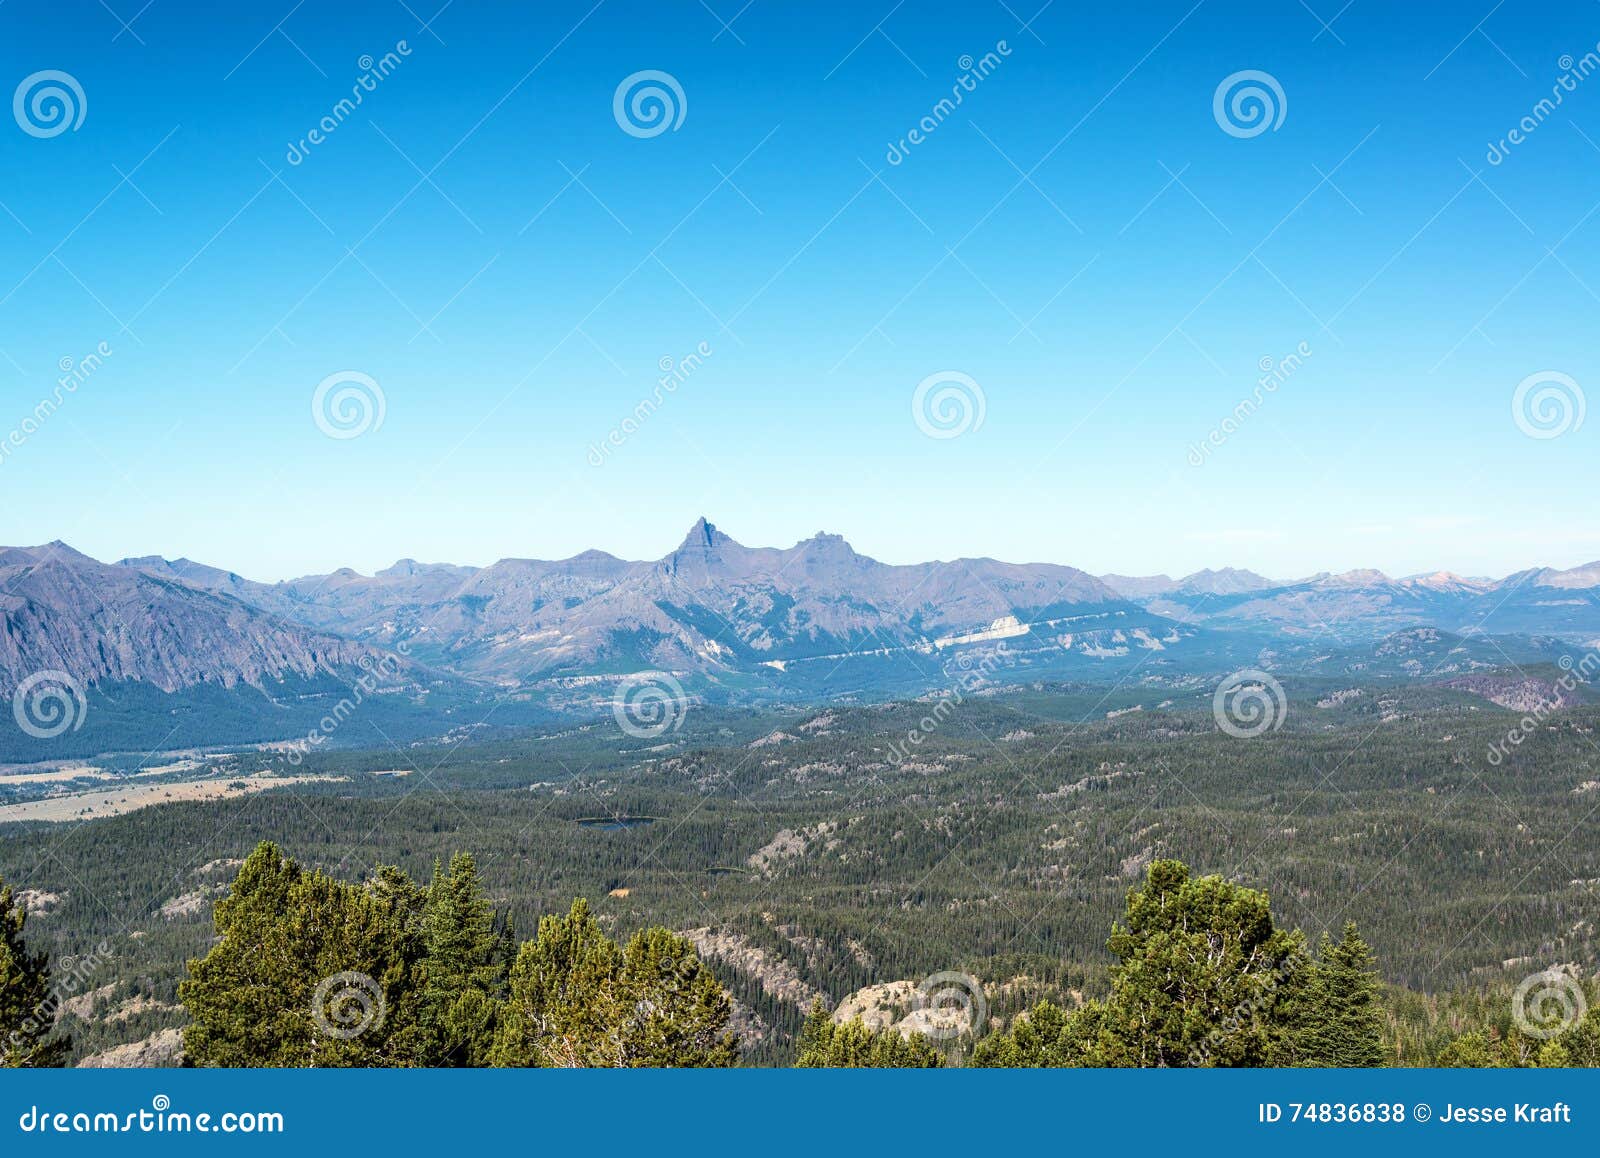 absaroka mountain range landscape